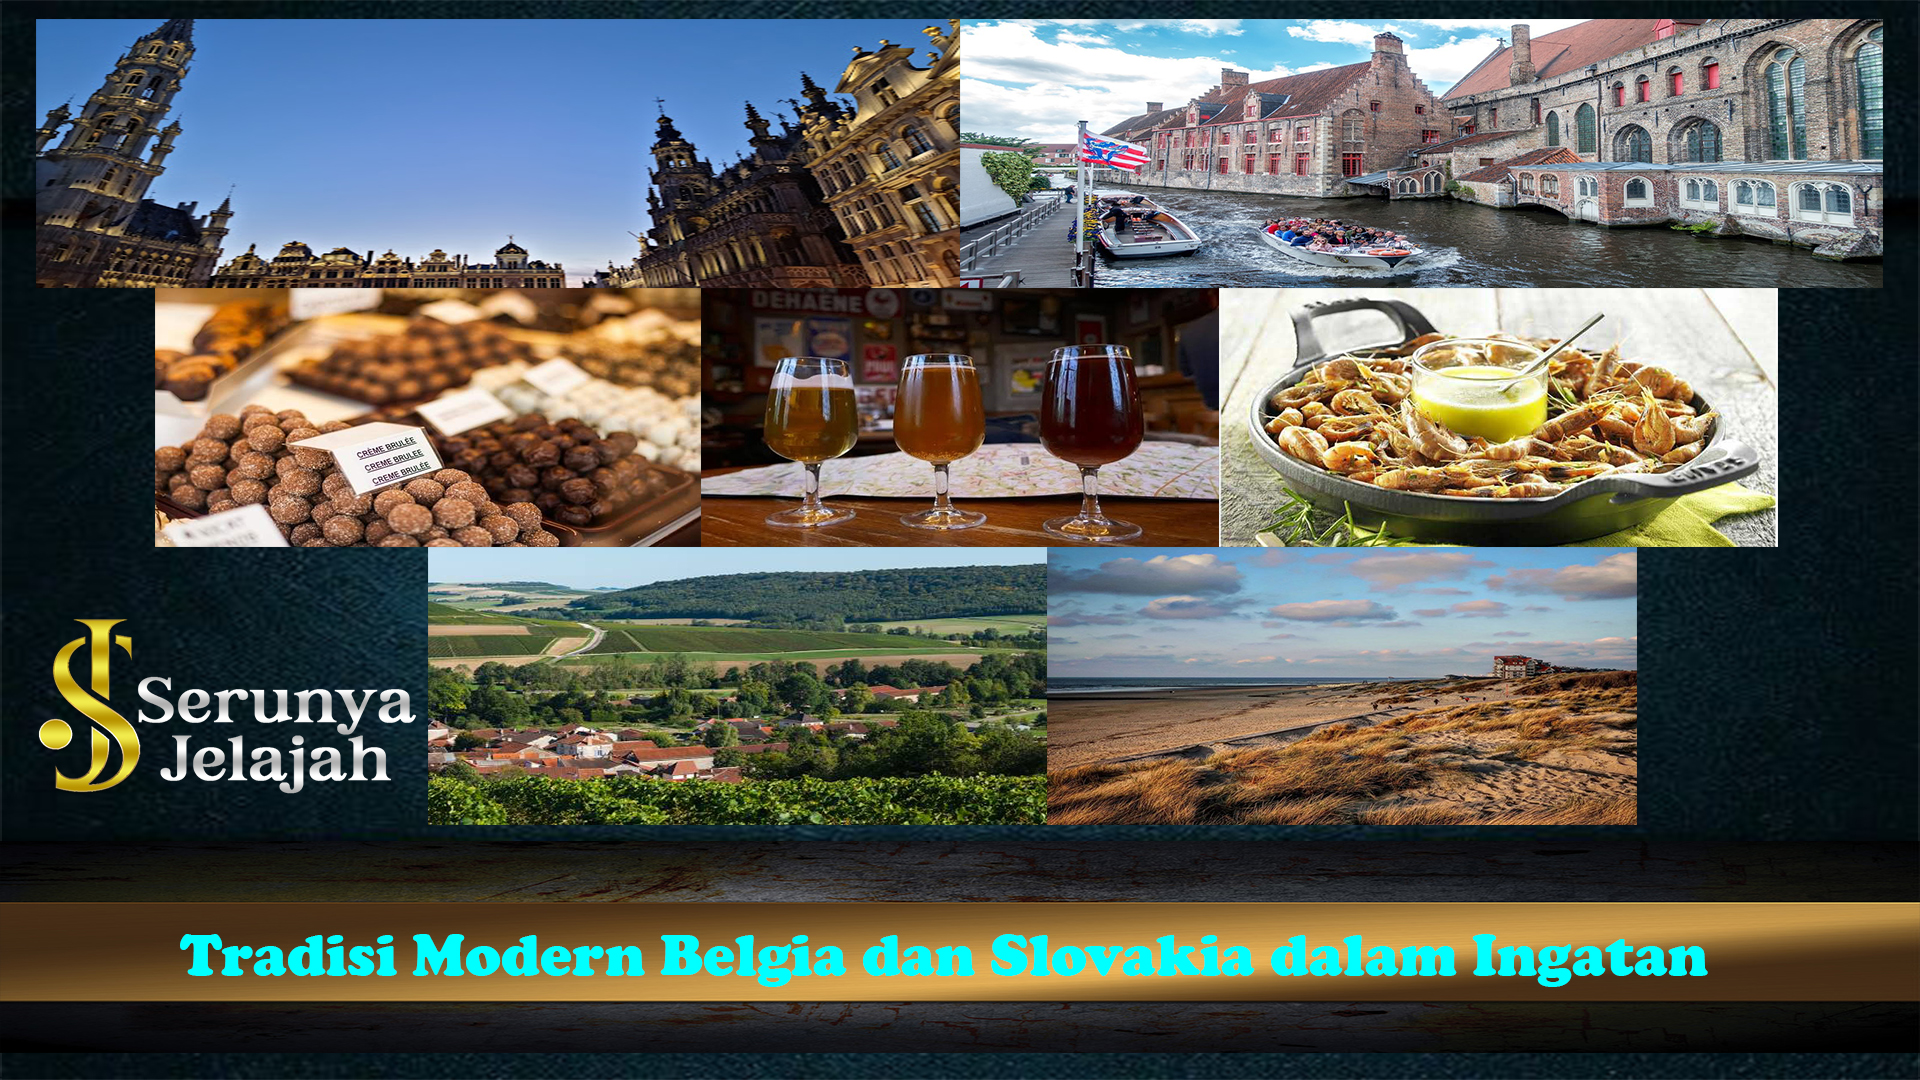 Tradisi Modern Belgia dan Slovakia dalam Ingatan